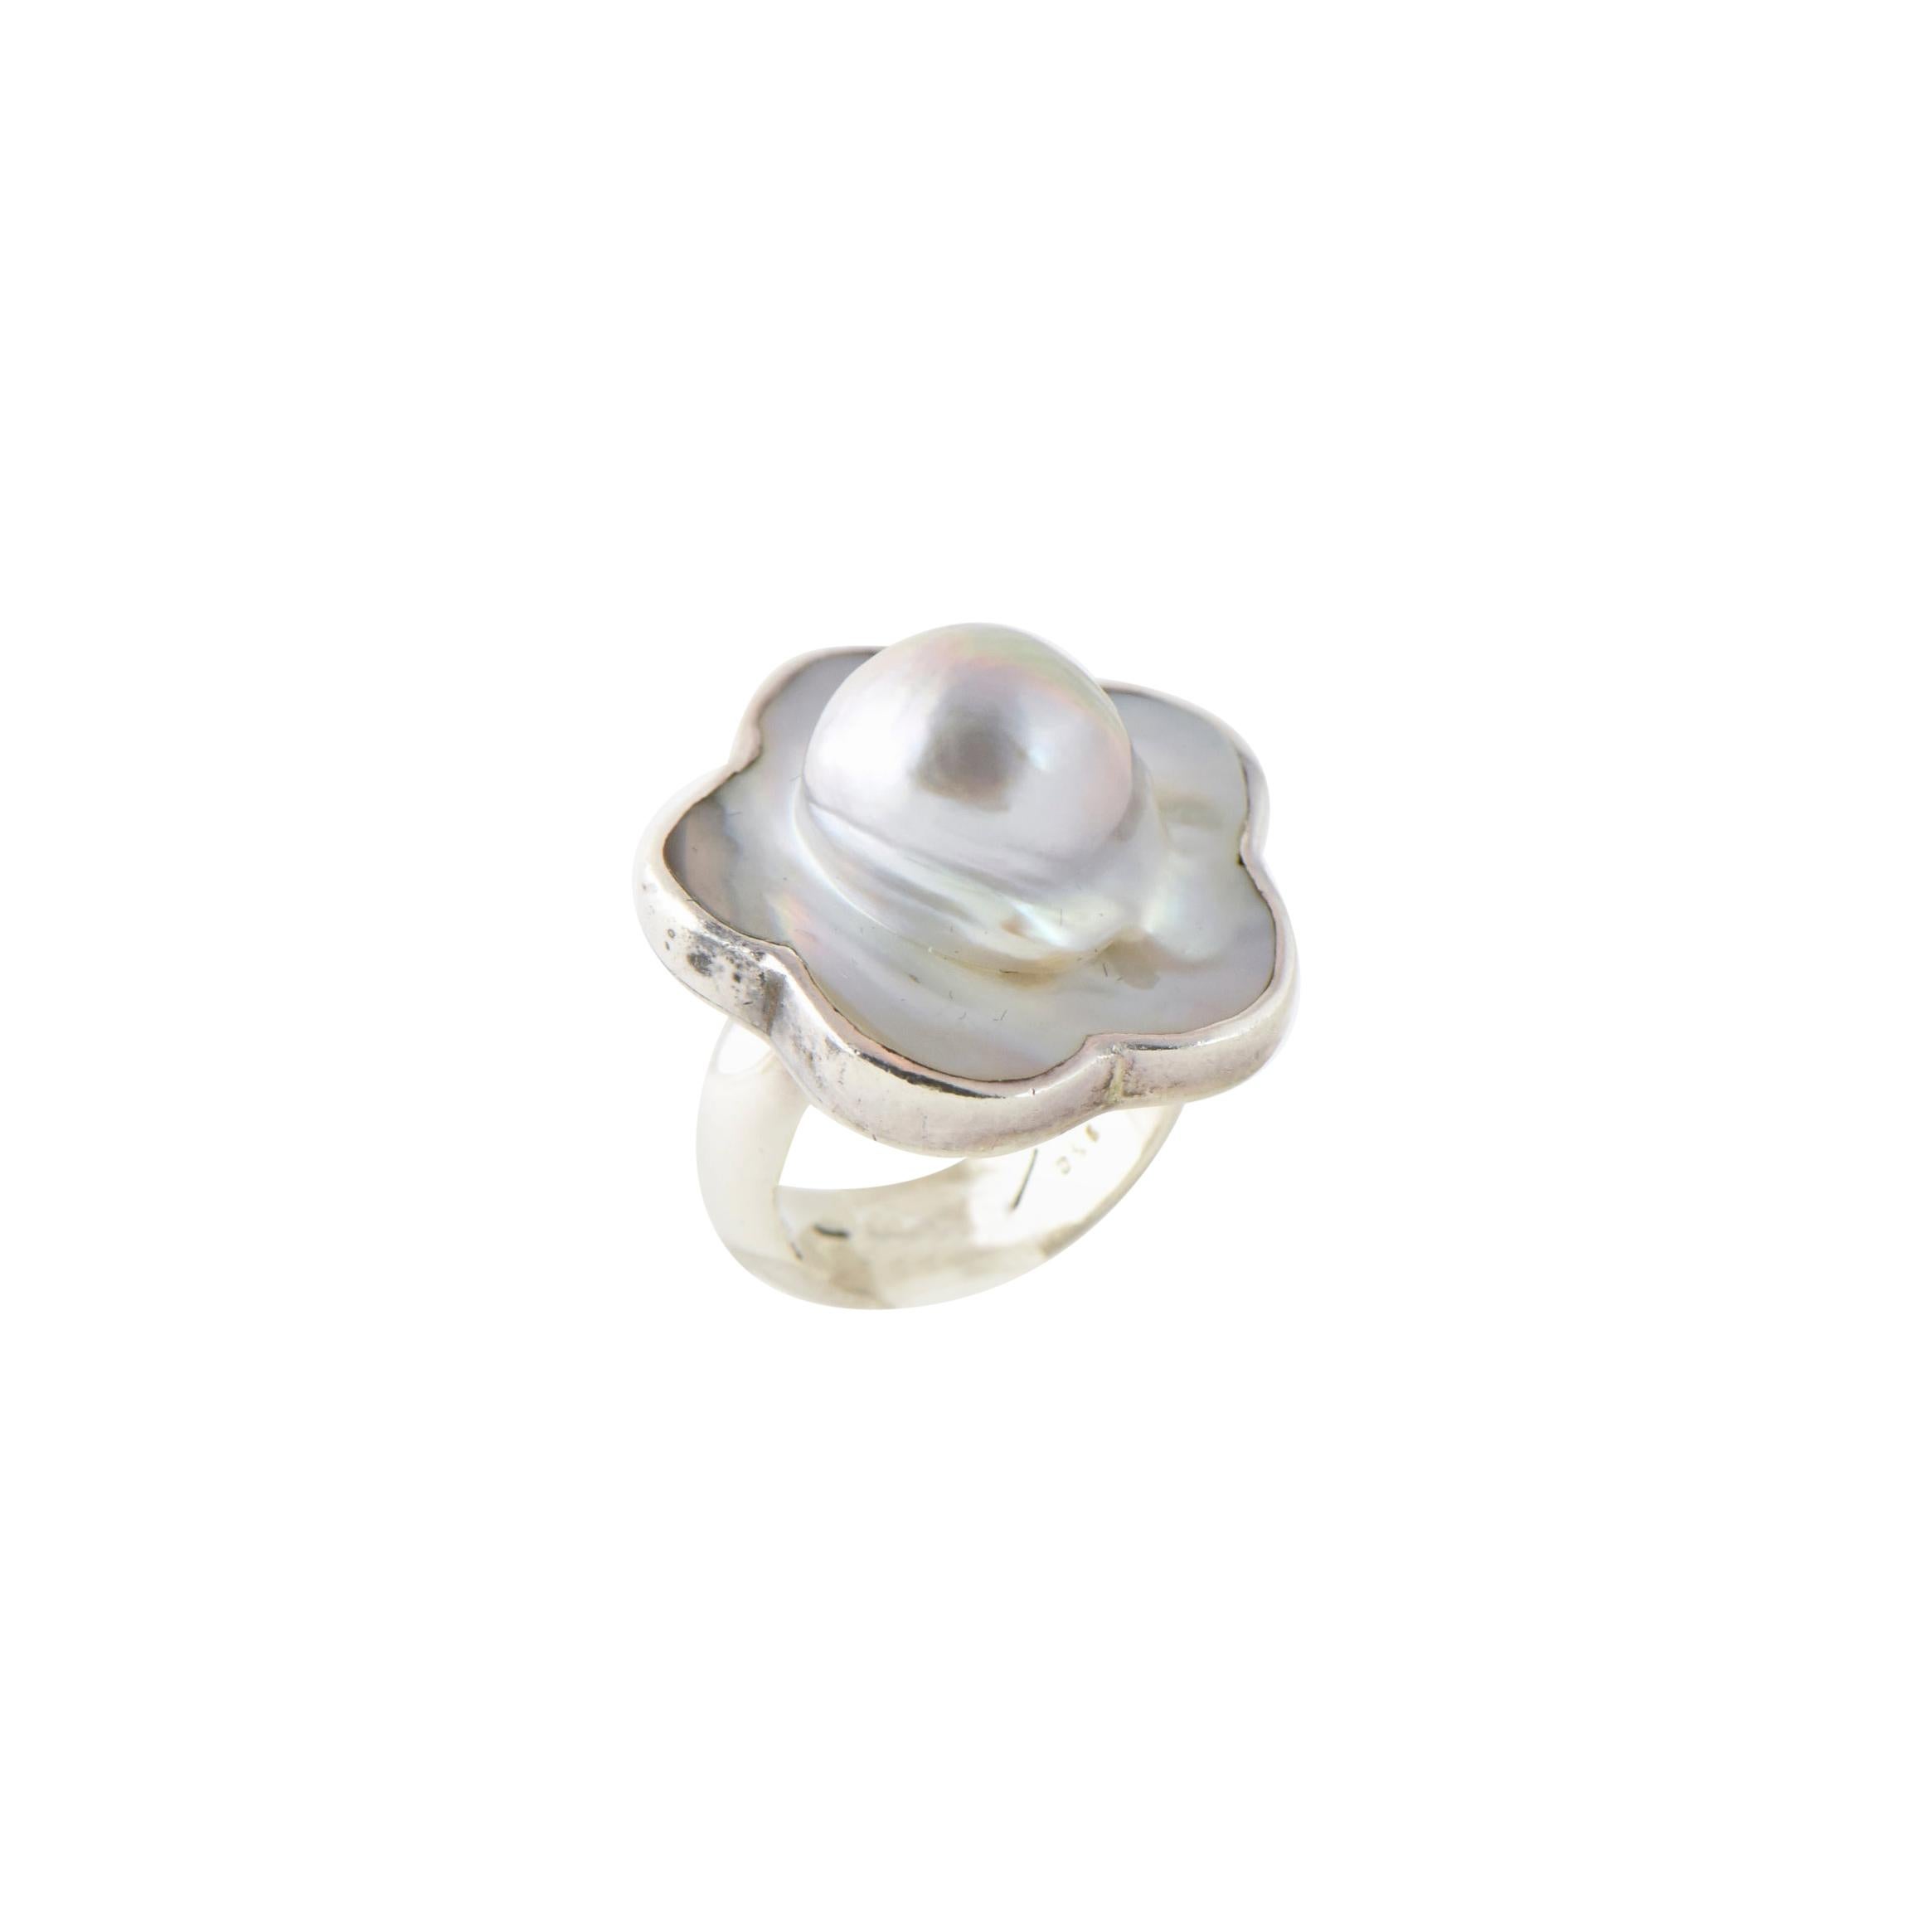 Barry Brinker Blister Pearl Flower Sterling Silver Ring